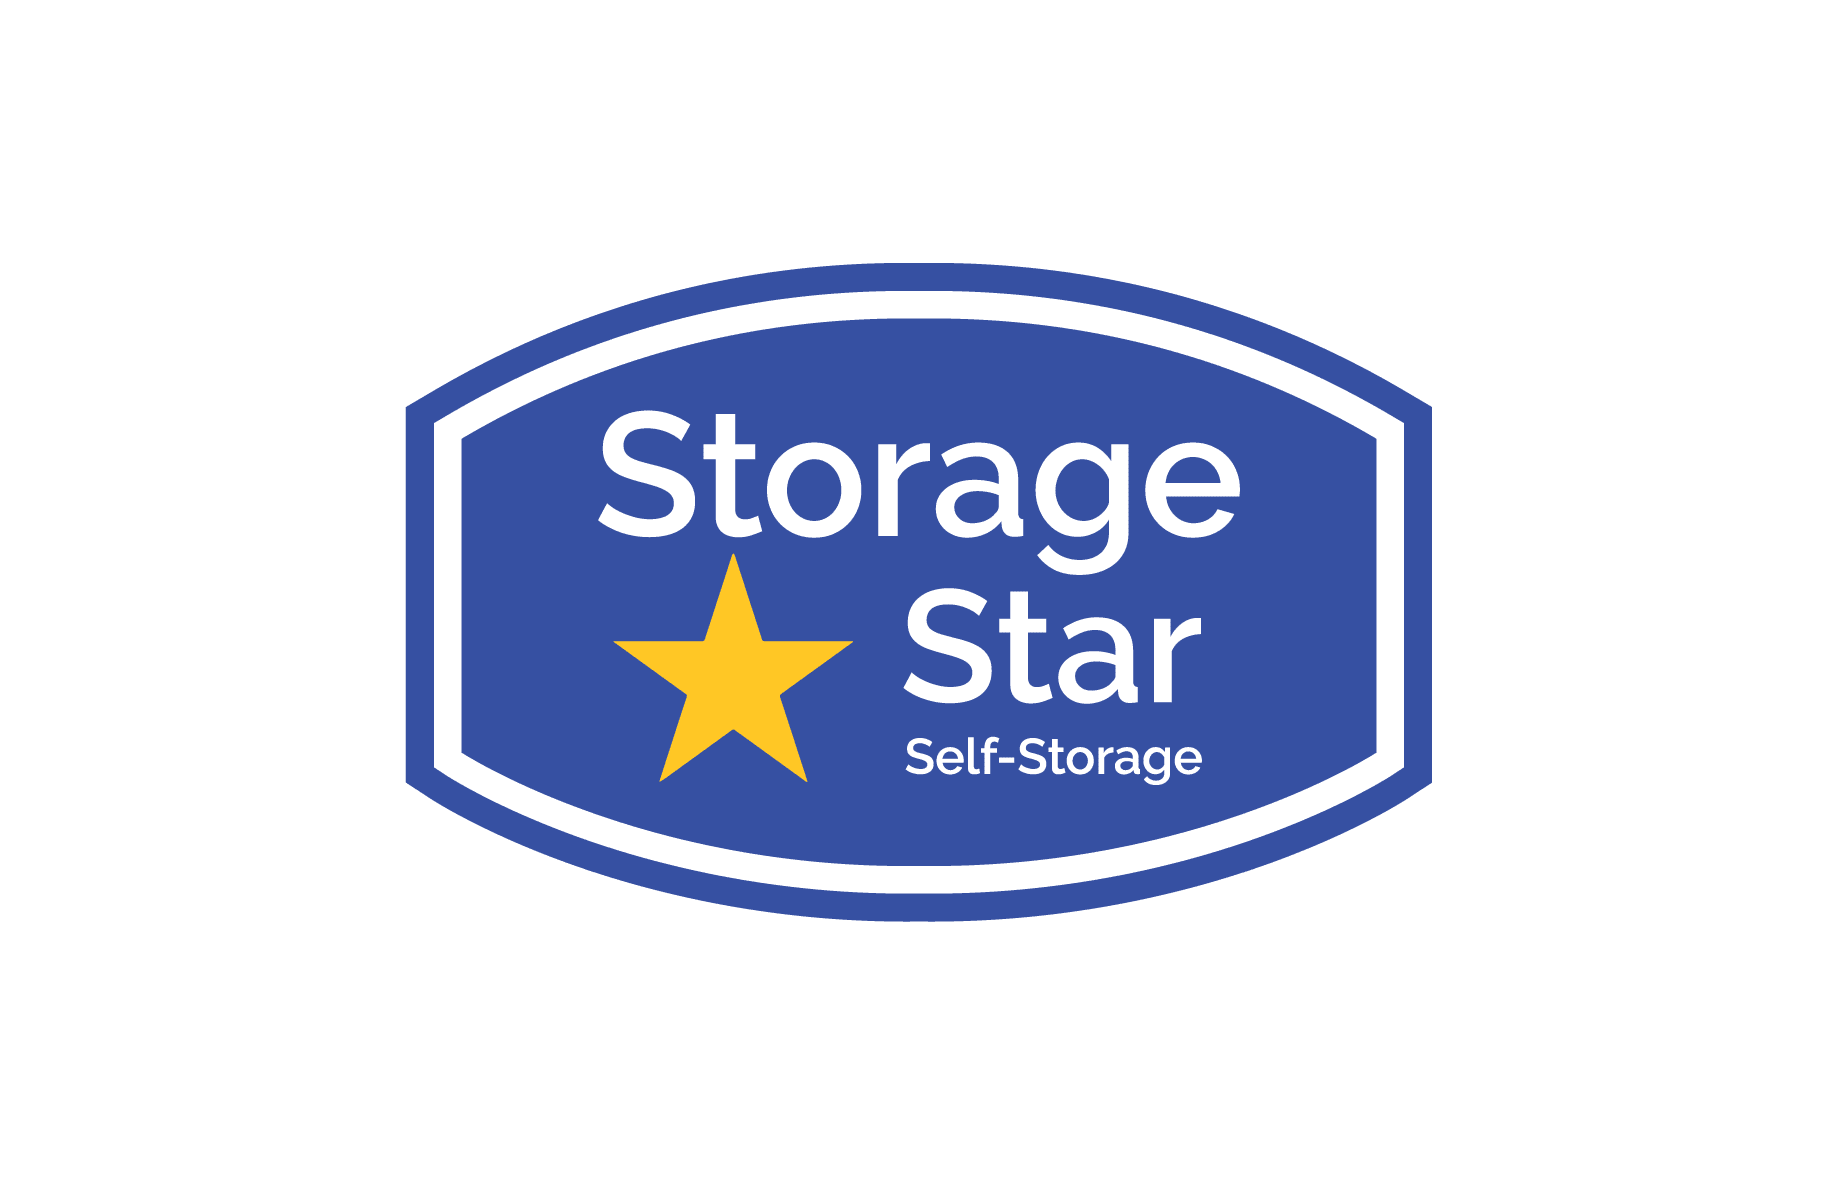 Storage Star - Anchorage North in Anchorage, Alaska logo